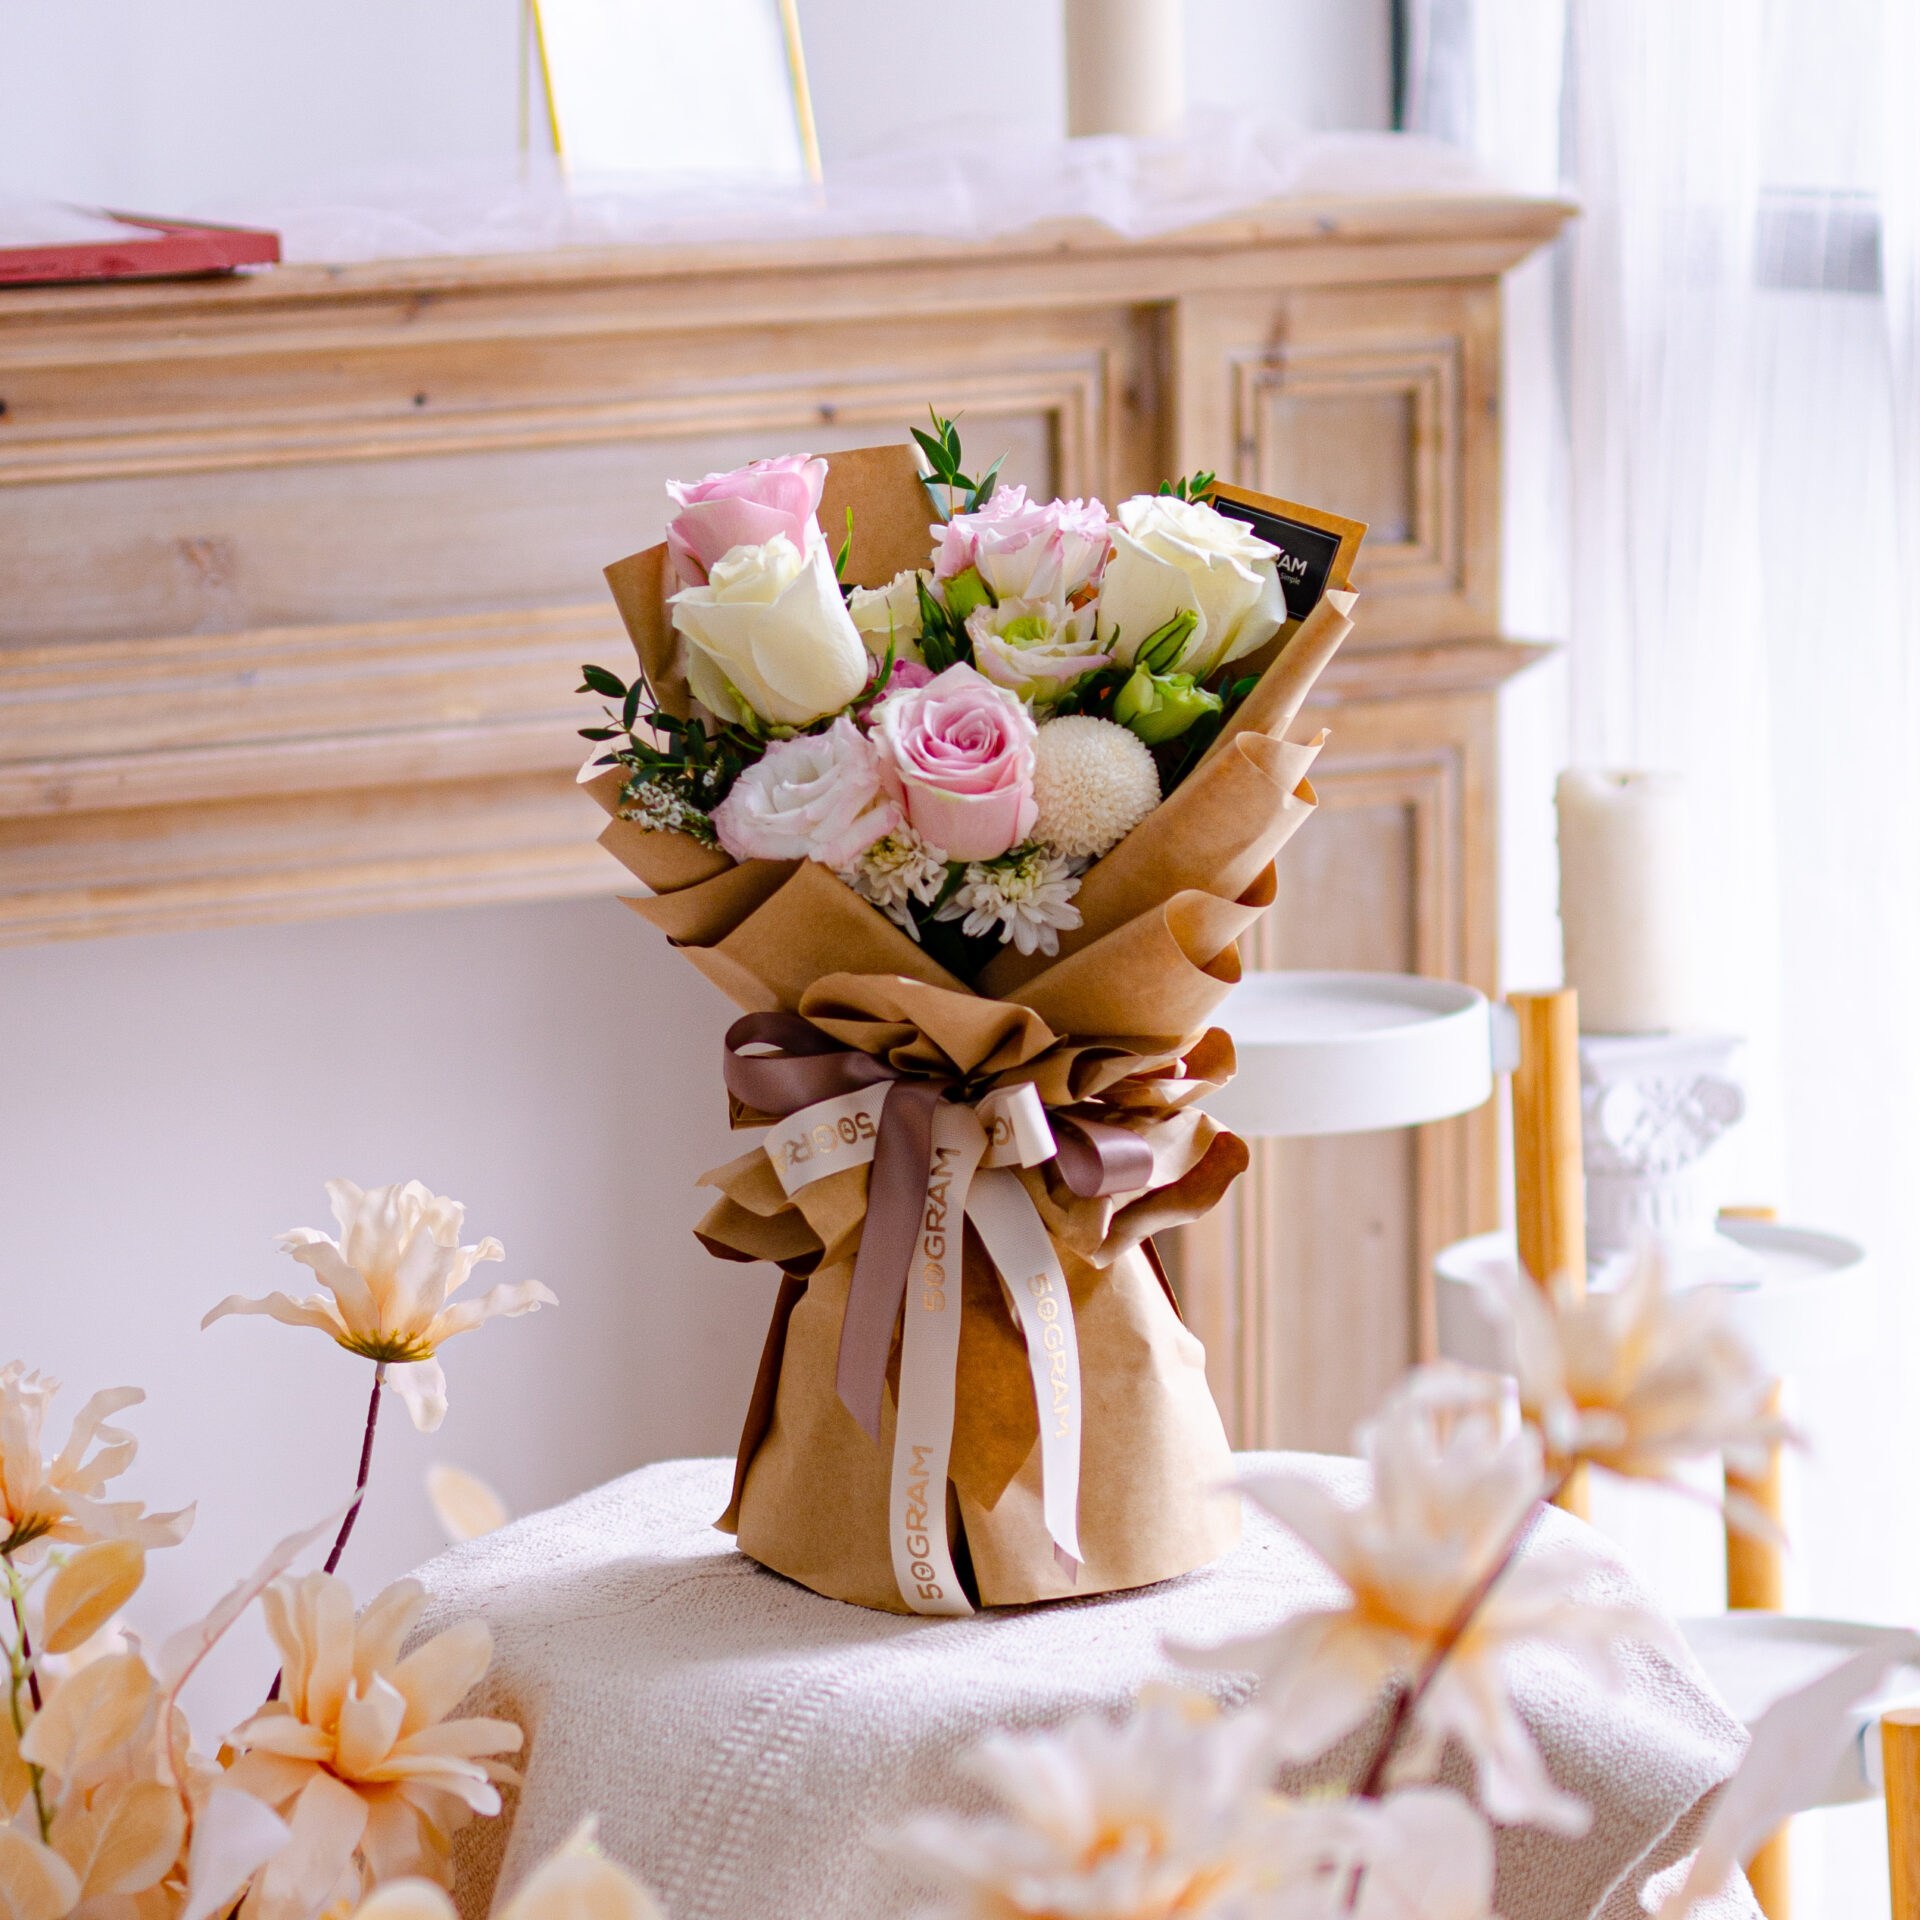 Sweet heart pink roses bouquet – (r) | hand bouquet